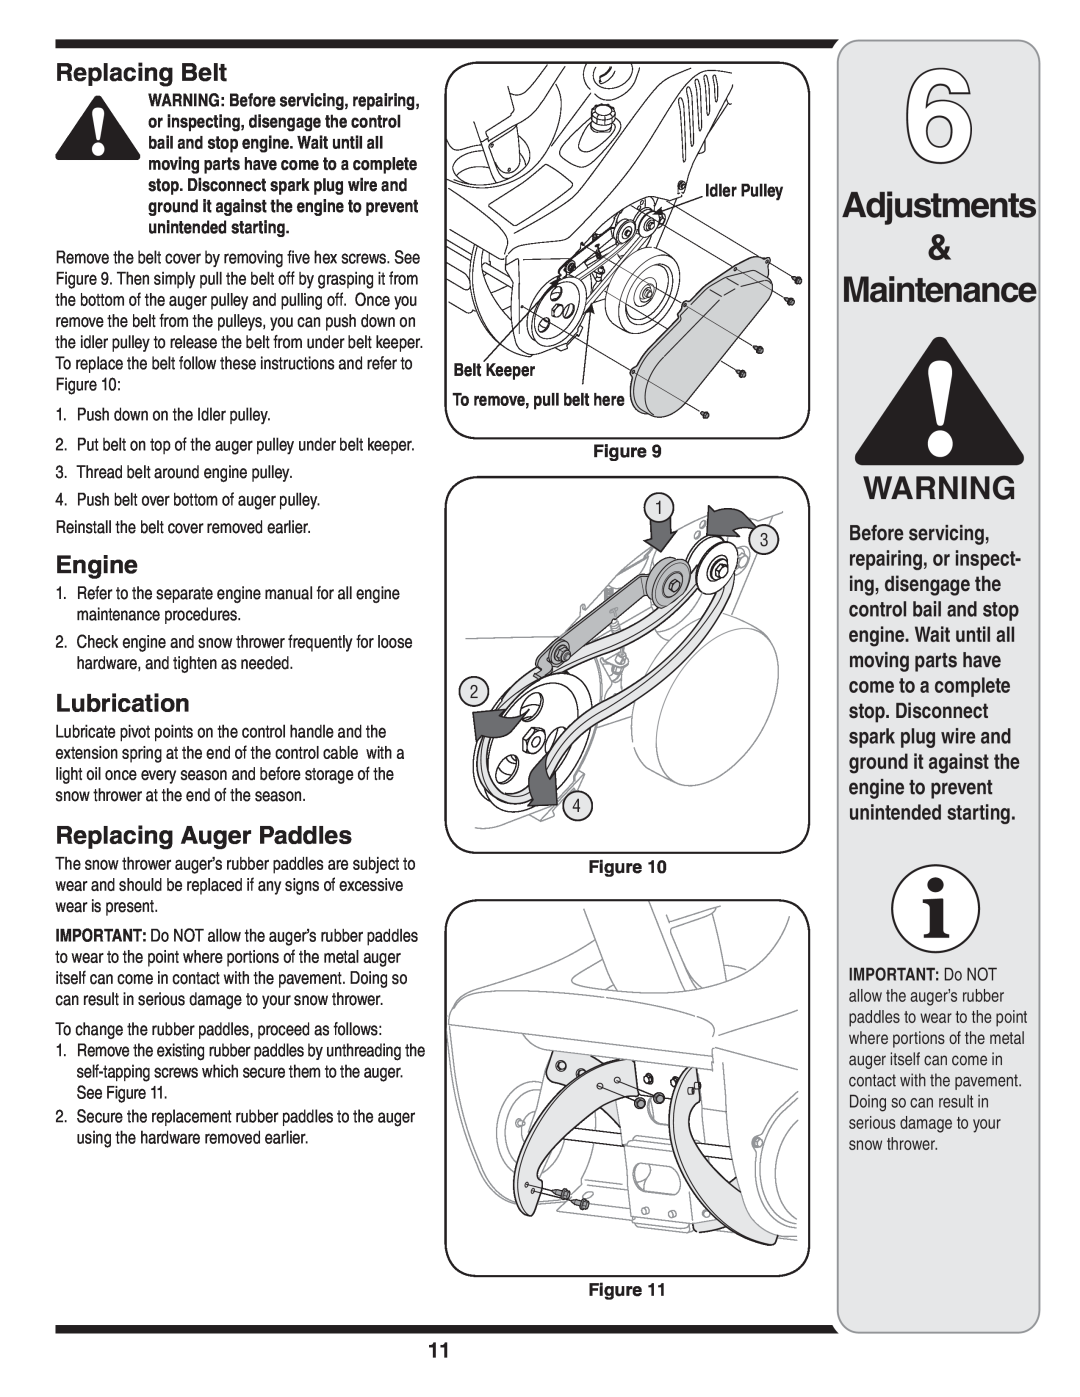 MTD 2B5 & 295 Replacing Belt, Engine, Lubrication, Replacing Auger Paddles, Adjustments & Maintenance, Figure Figure 